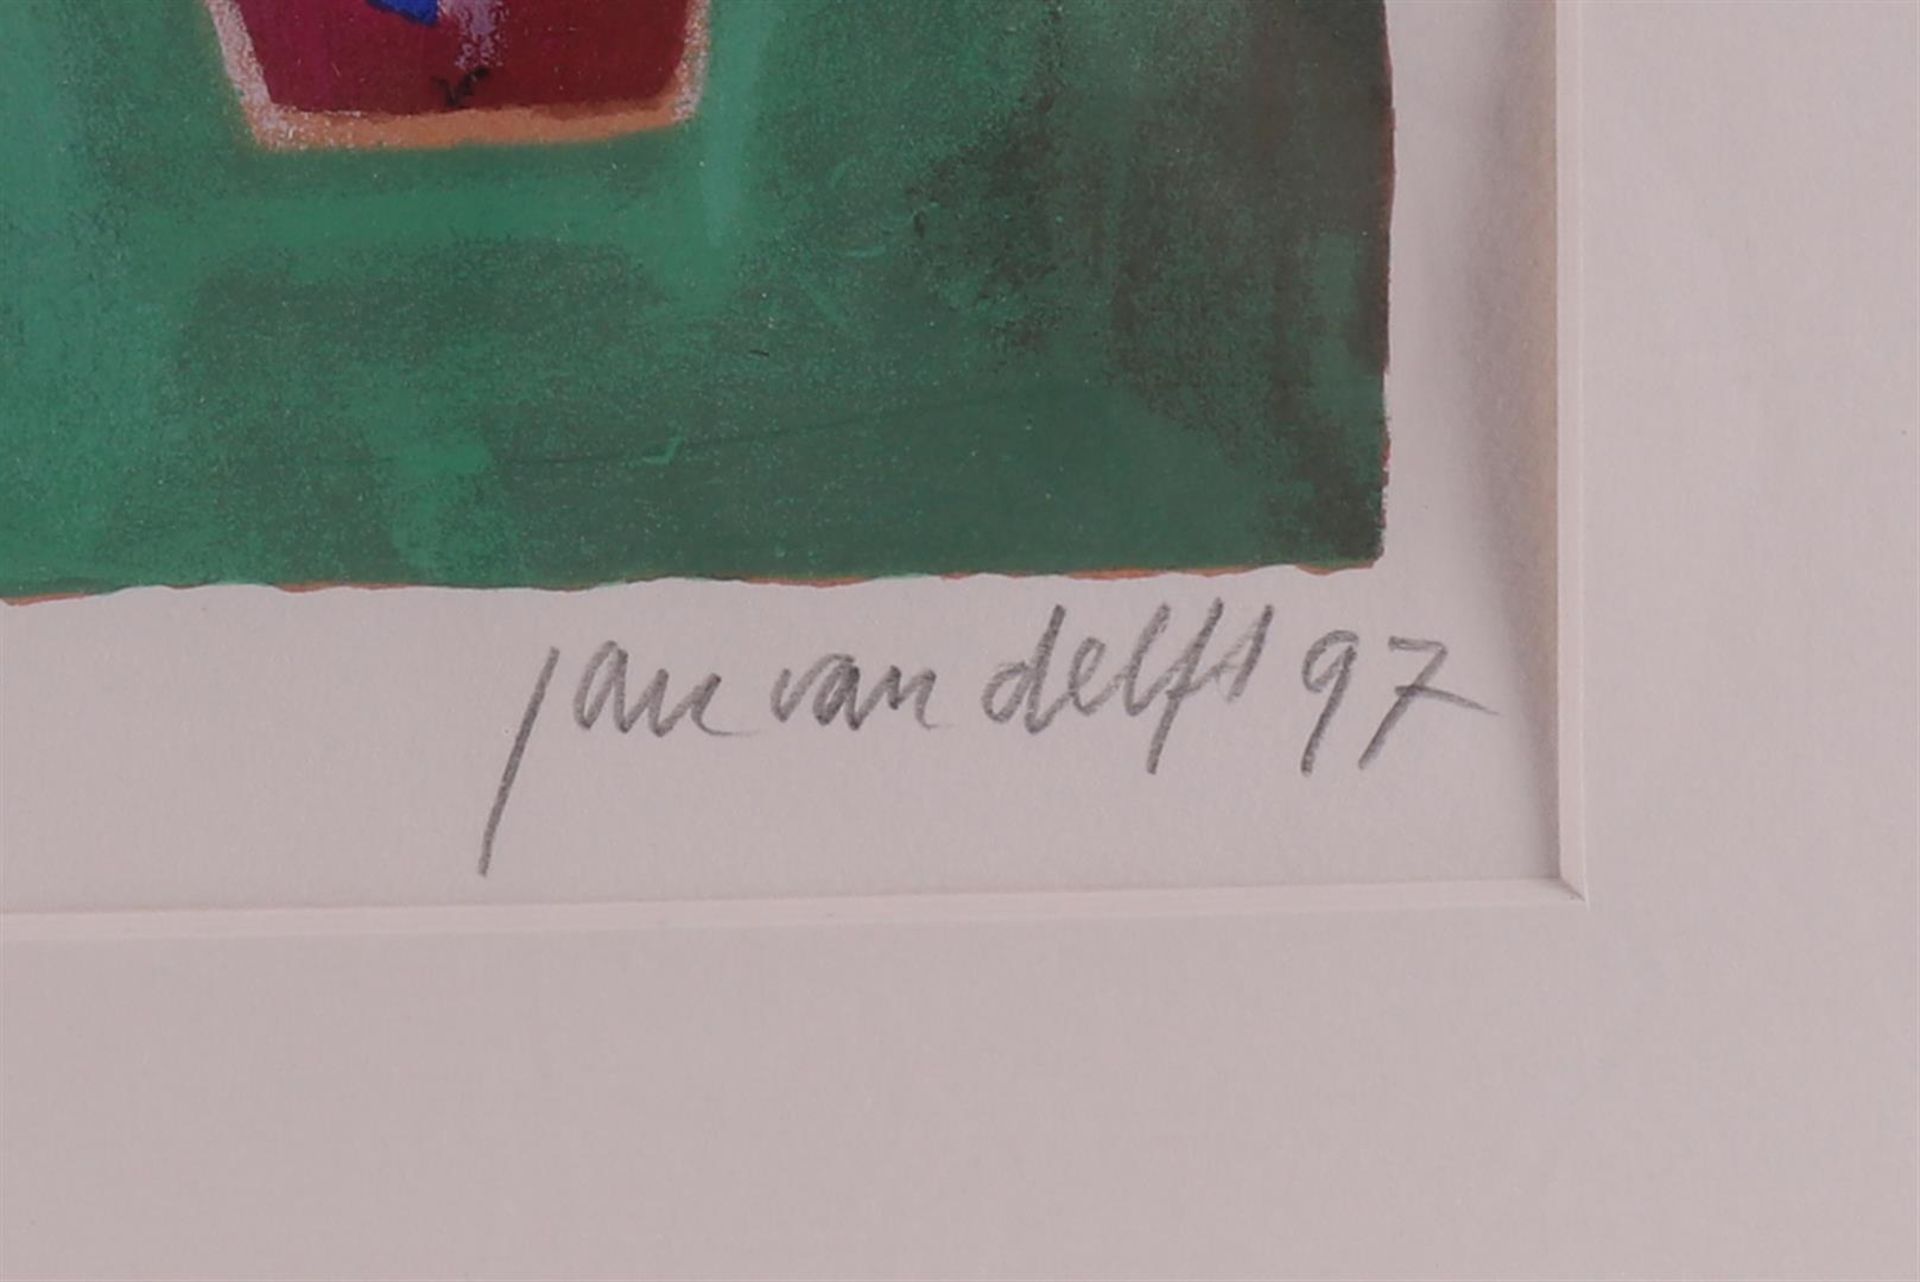 Delft van, Jan (1950) 'Watchmen', 1997, - Bild 2 aus 2